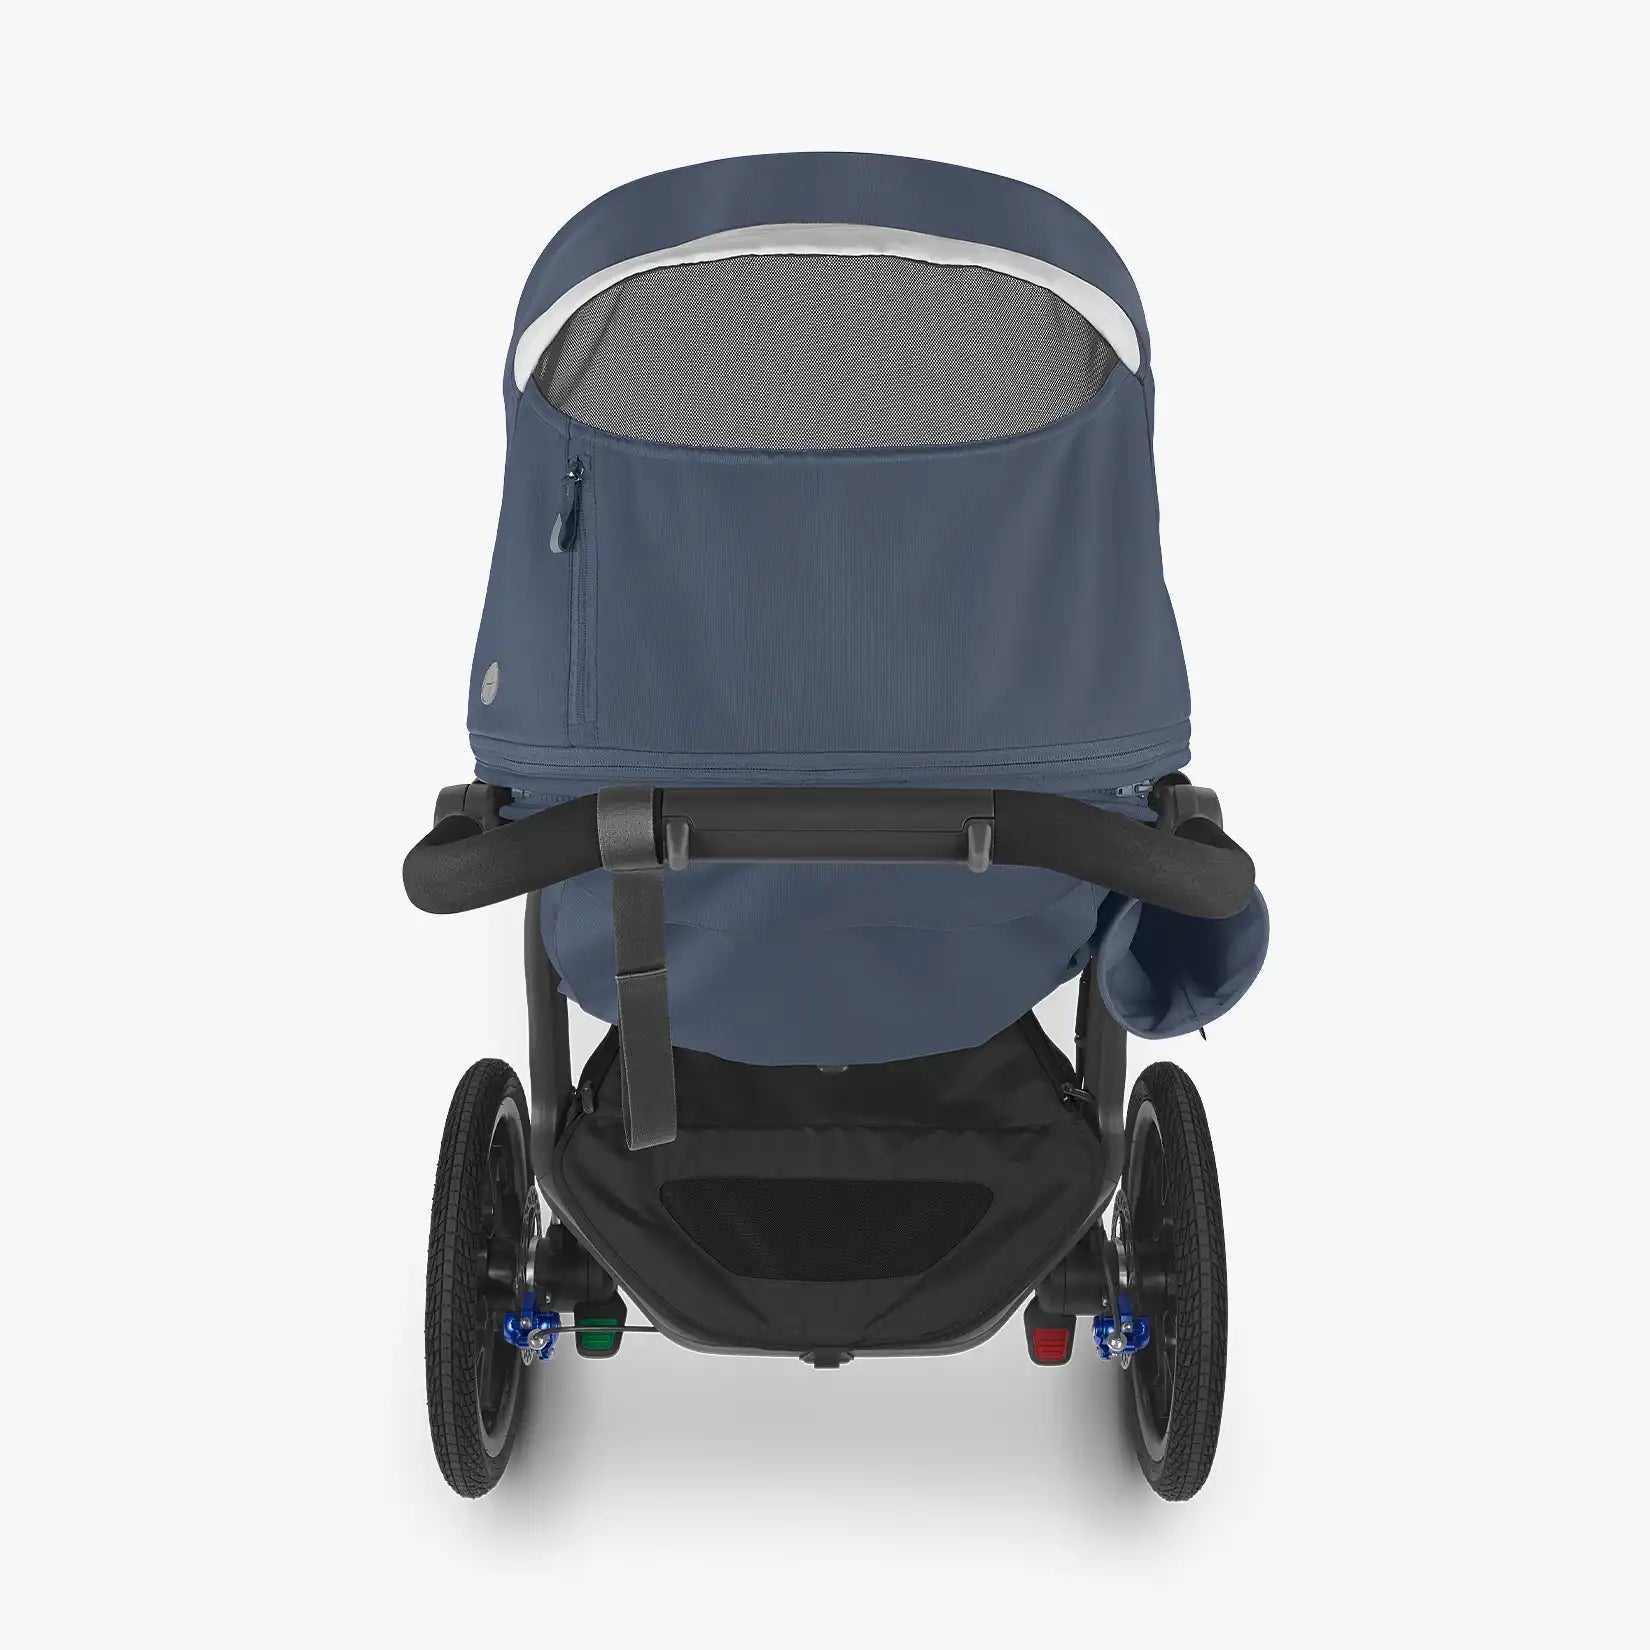 UPPAbaby Ridge Stroller - ANB Baby -810030098577$500 - $1000